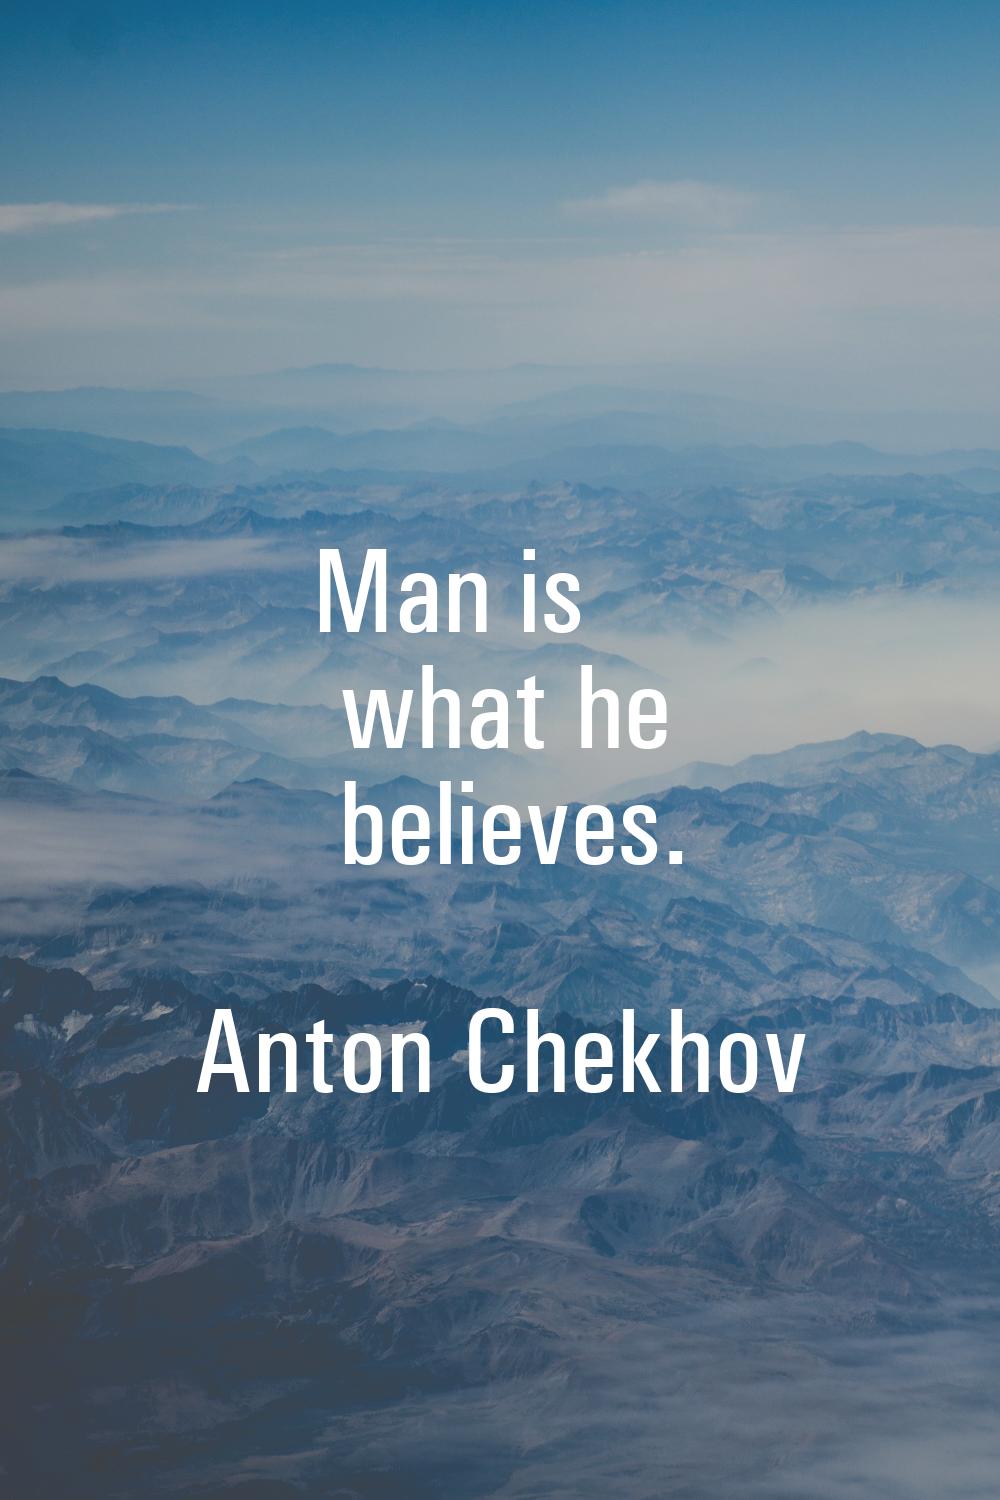 Man is what he believes.